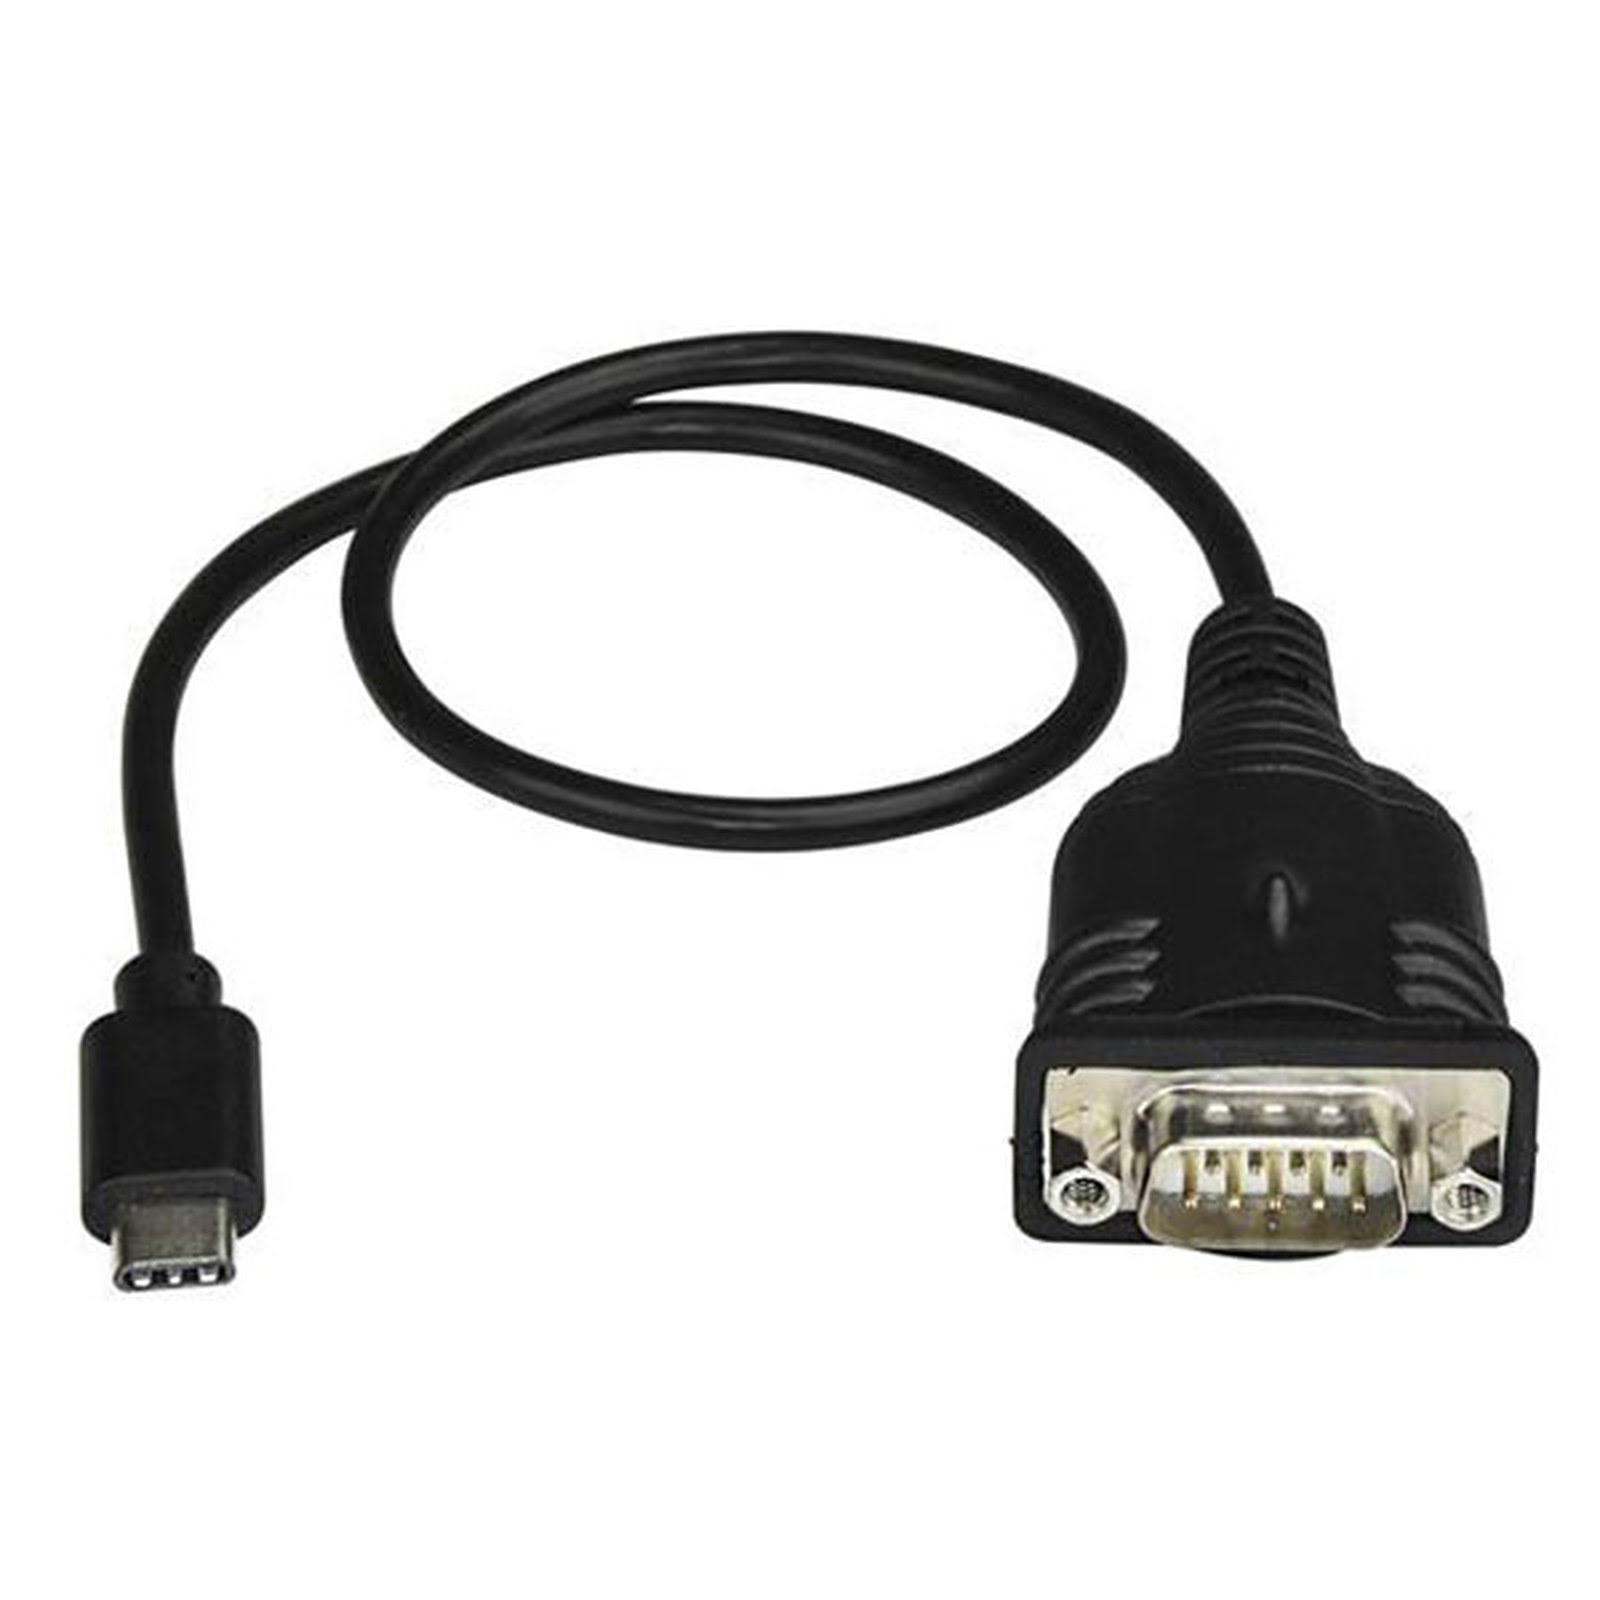 USB-C vers Port Serie DB9/RS232 - ICUSB232PROC - Connectique PC - 1